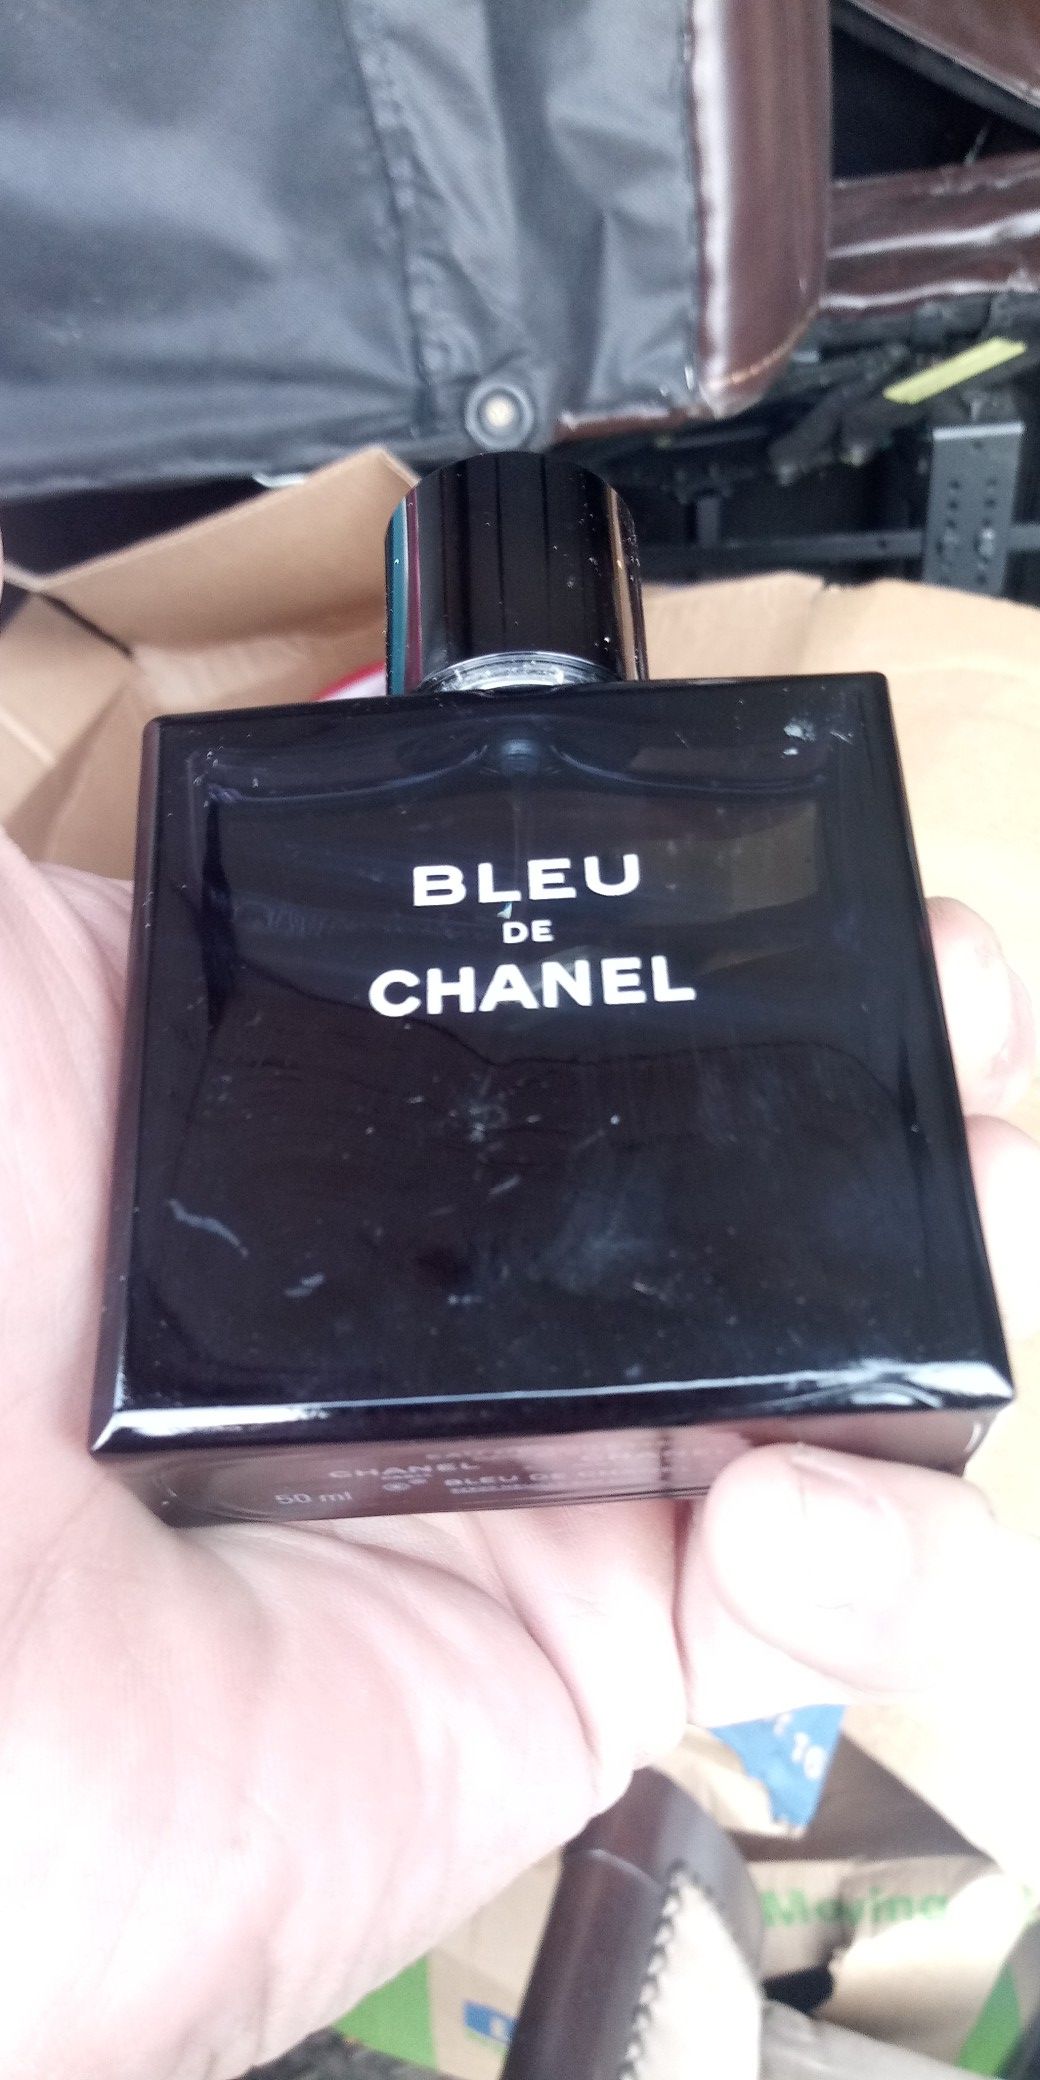 Chanel #5 Perfume